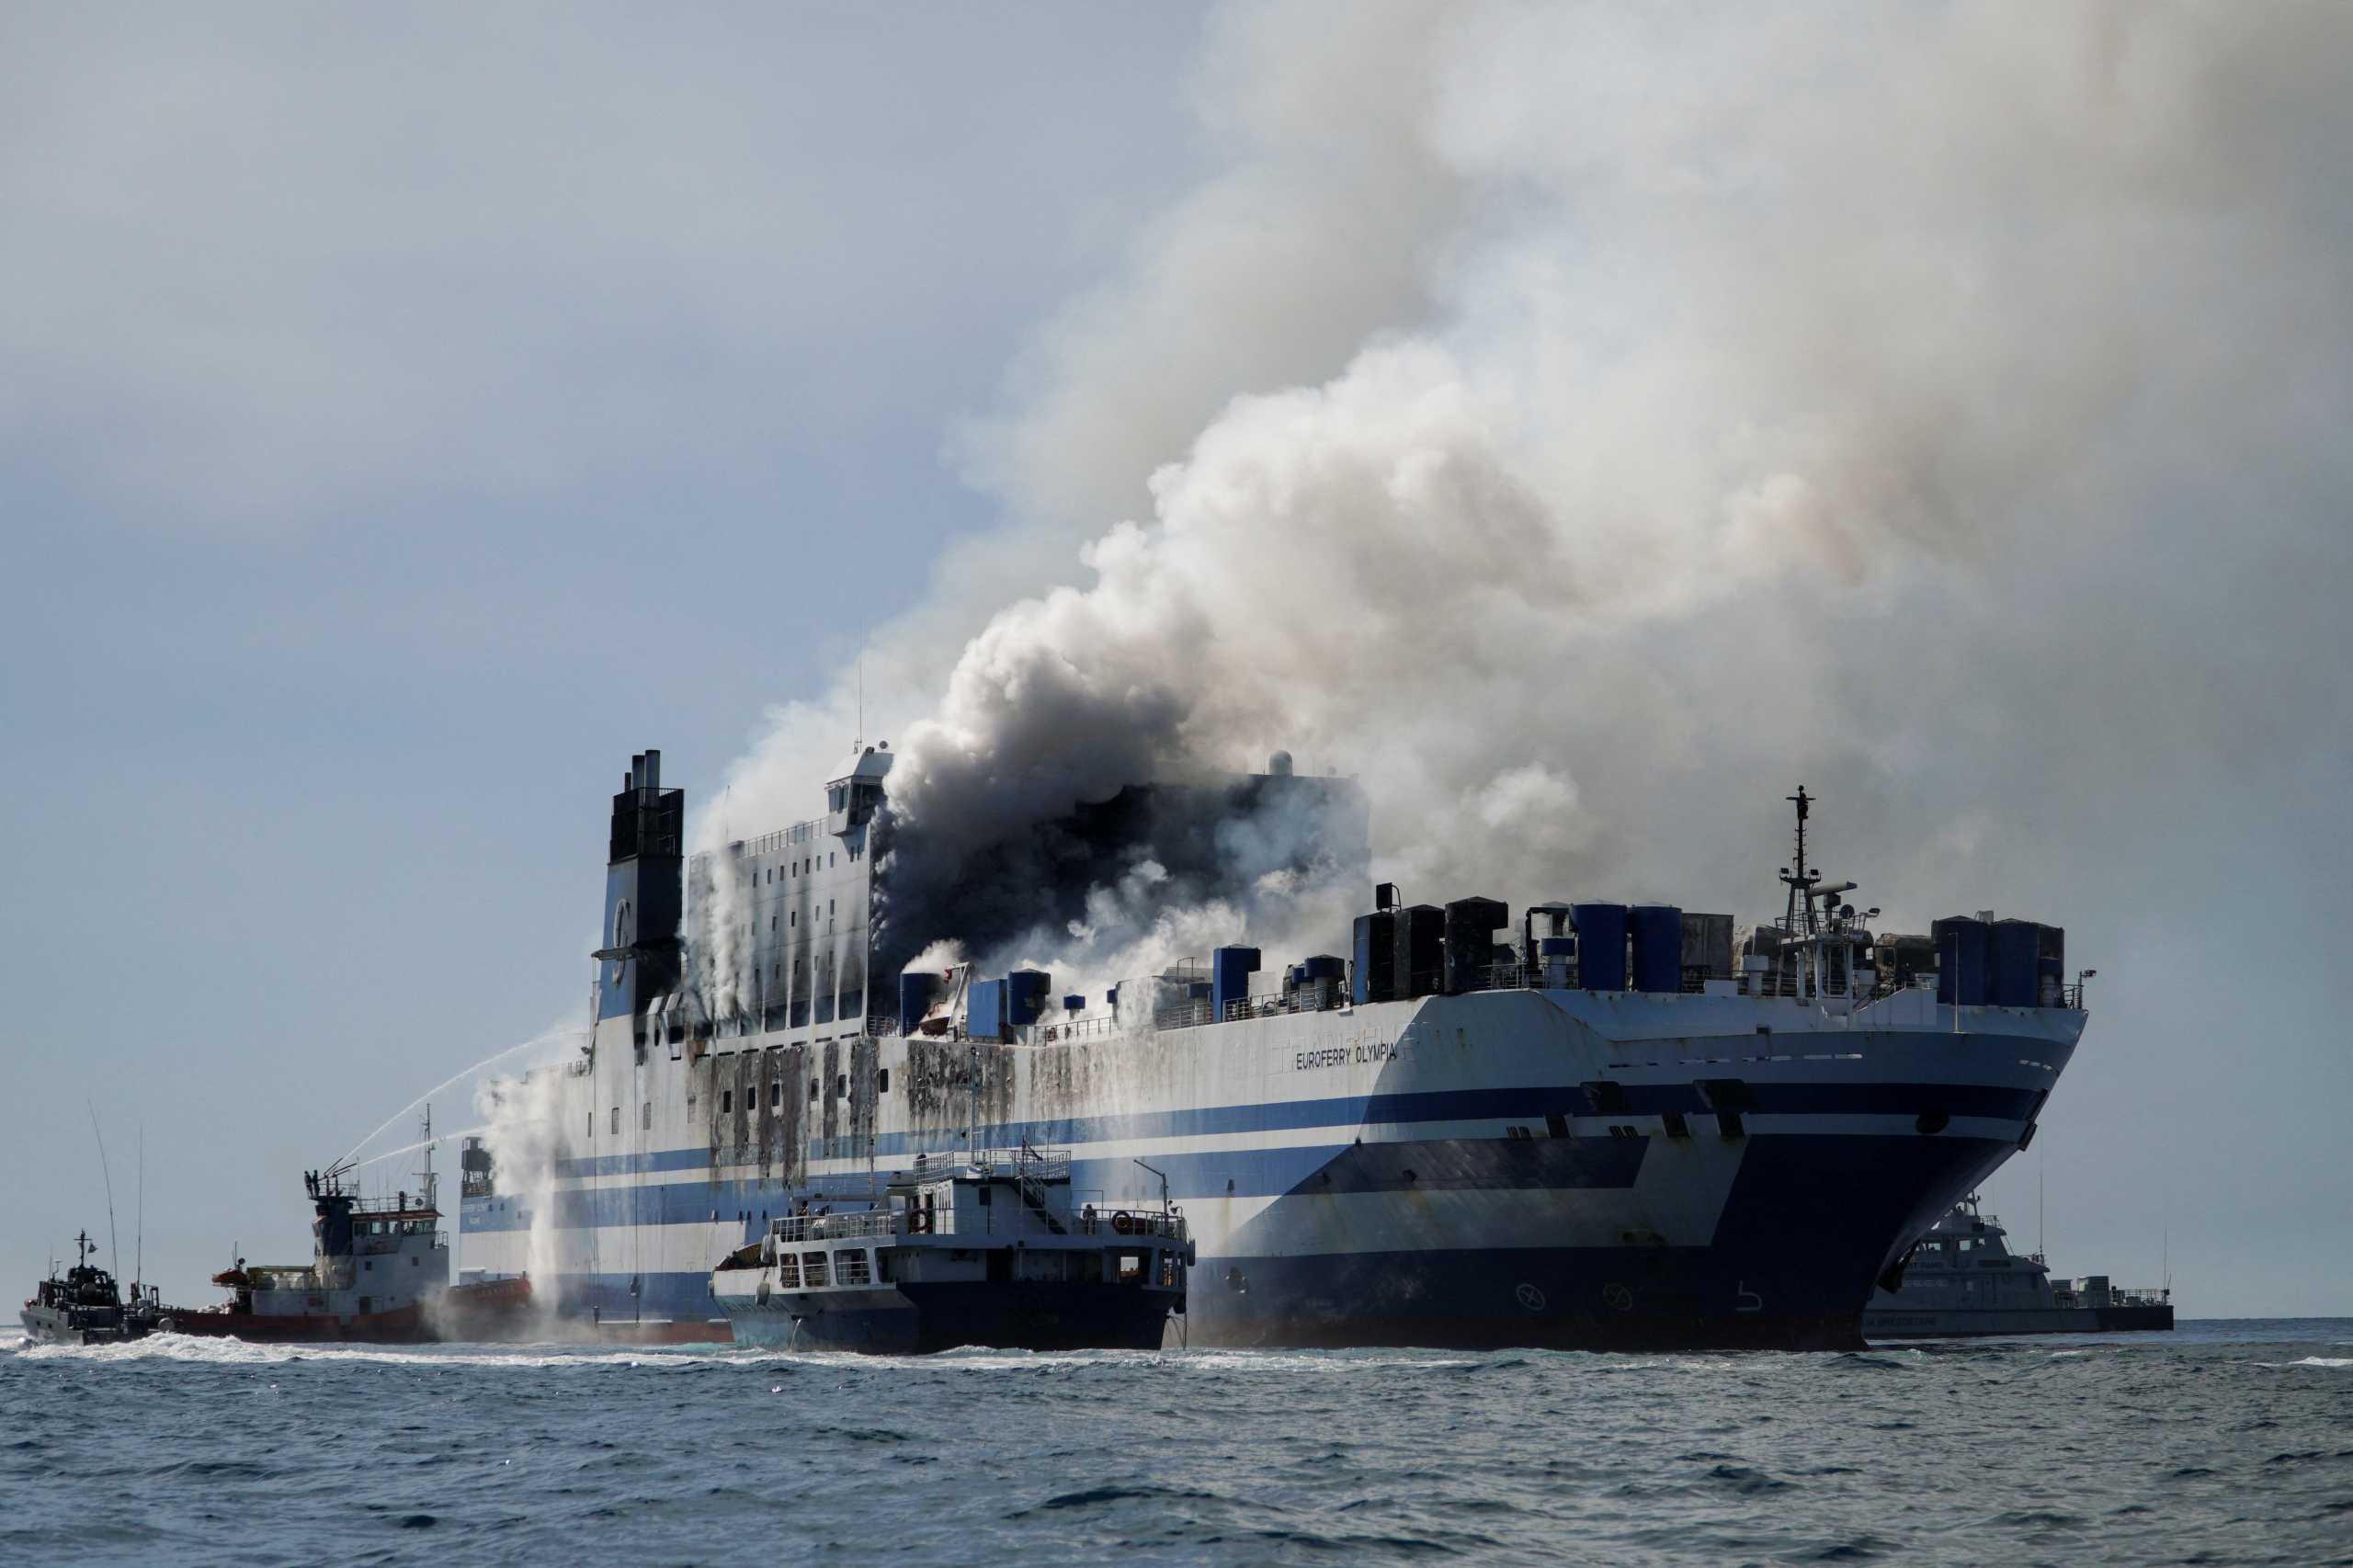 Euroferry Olympia: Αναζωπυρώθηκε η φωτιά μόλις άνοιξε ο καταπέλτης στο πλοίο – Τρεις οι αγνοούμενοι